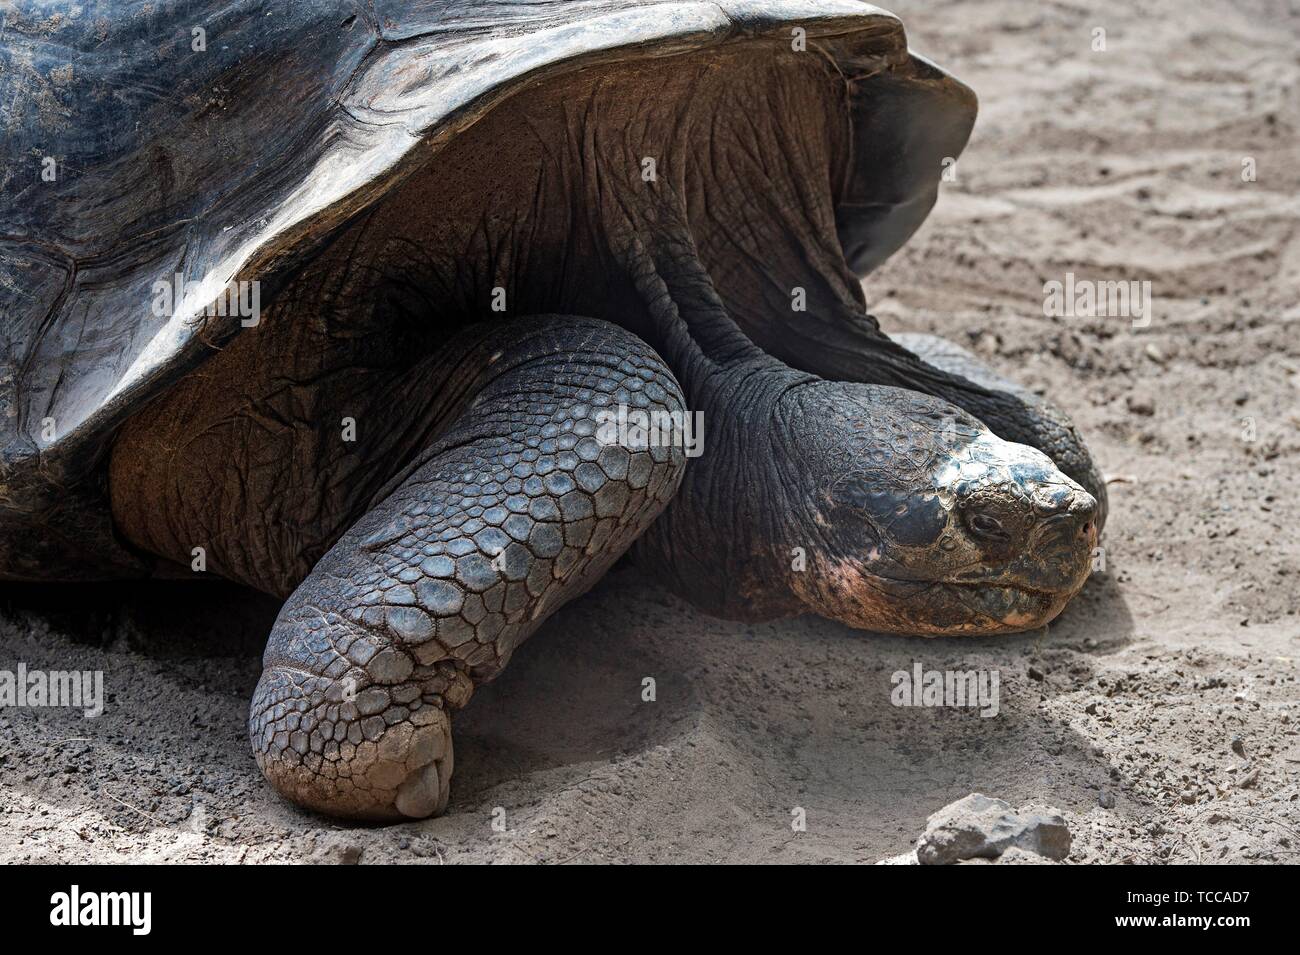 Galápagos giant tortoise (Chelonoidis nigra ssp), Tortoise breeding center of Isabela Island, Galapagos Islands, Ecuador. Stock Photo